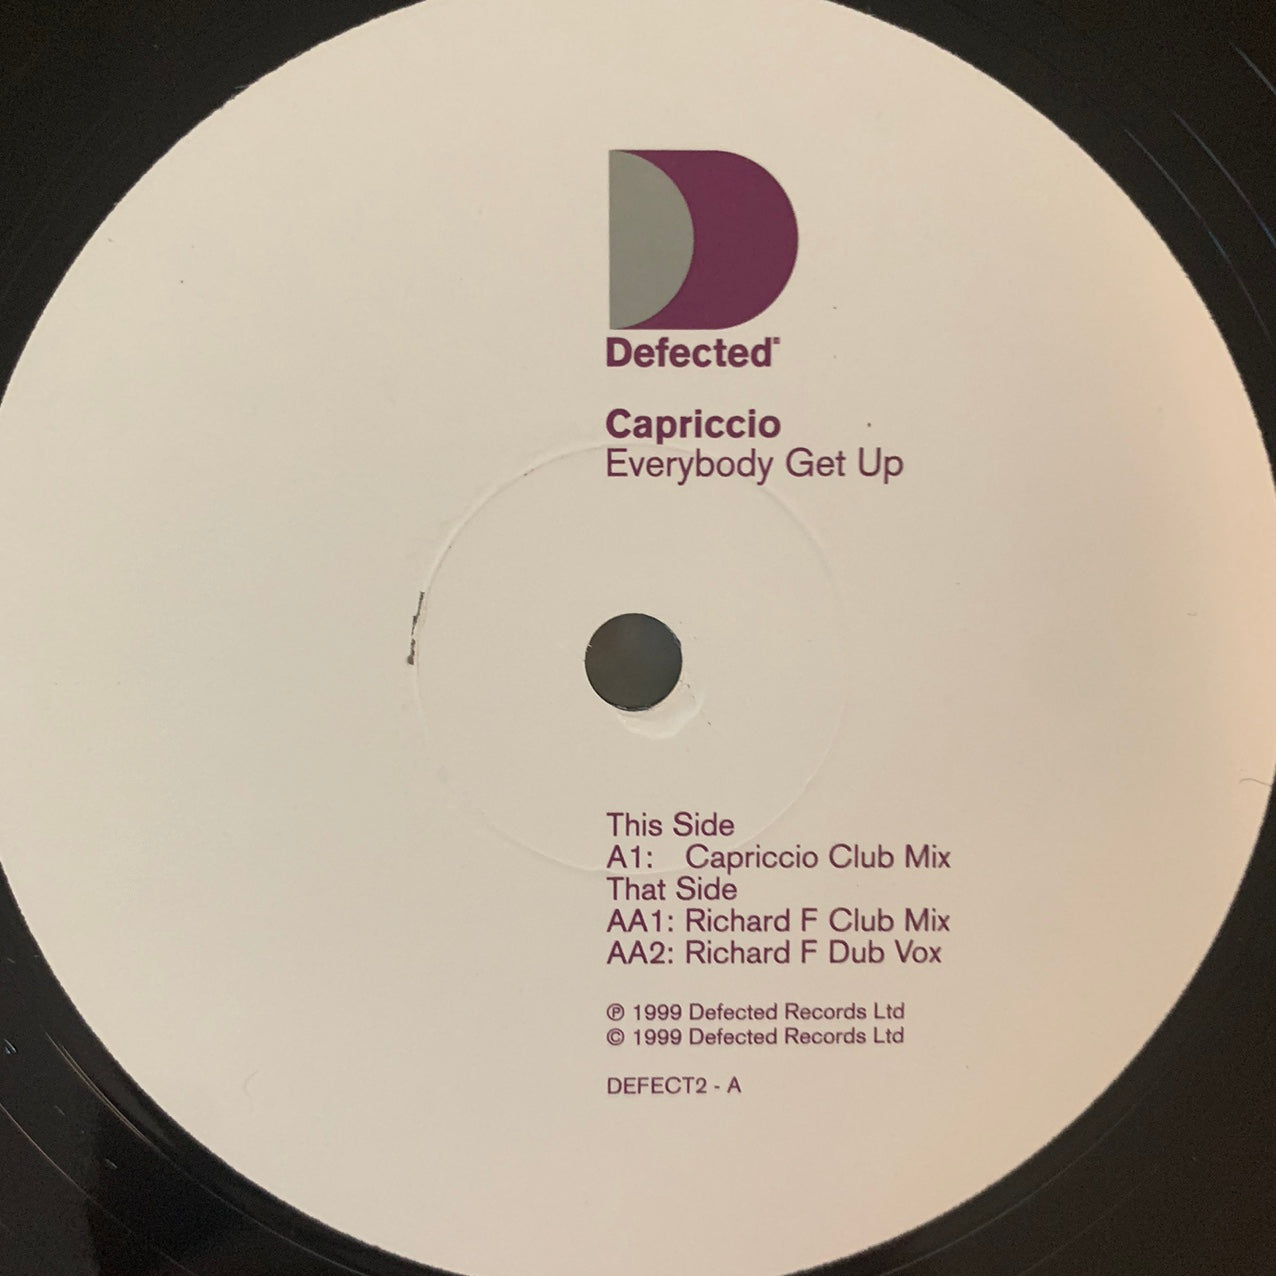 Capriccio “Everybody Get Up” 3 Track 12inch Vinyl